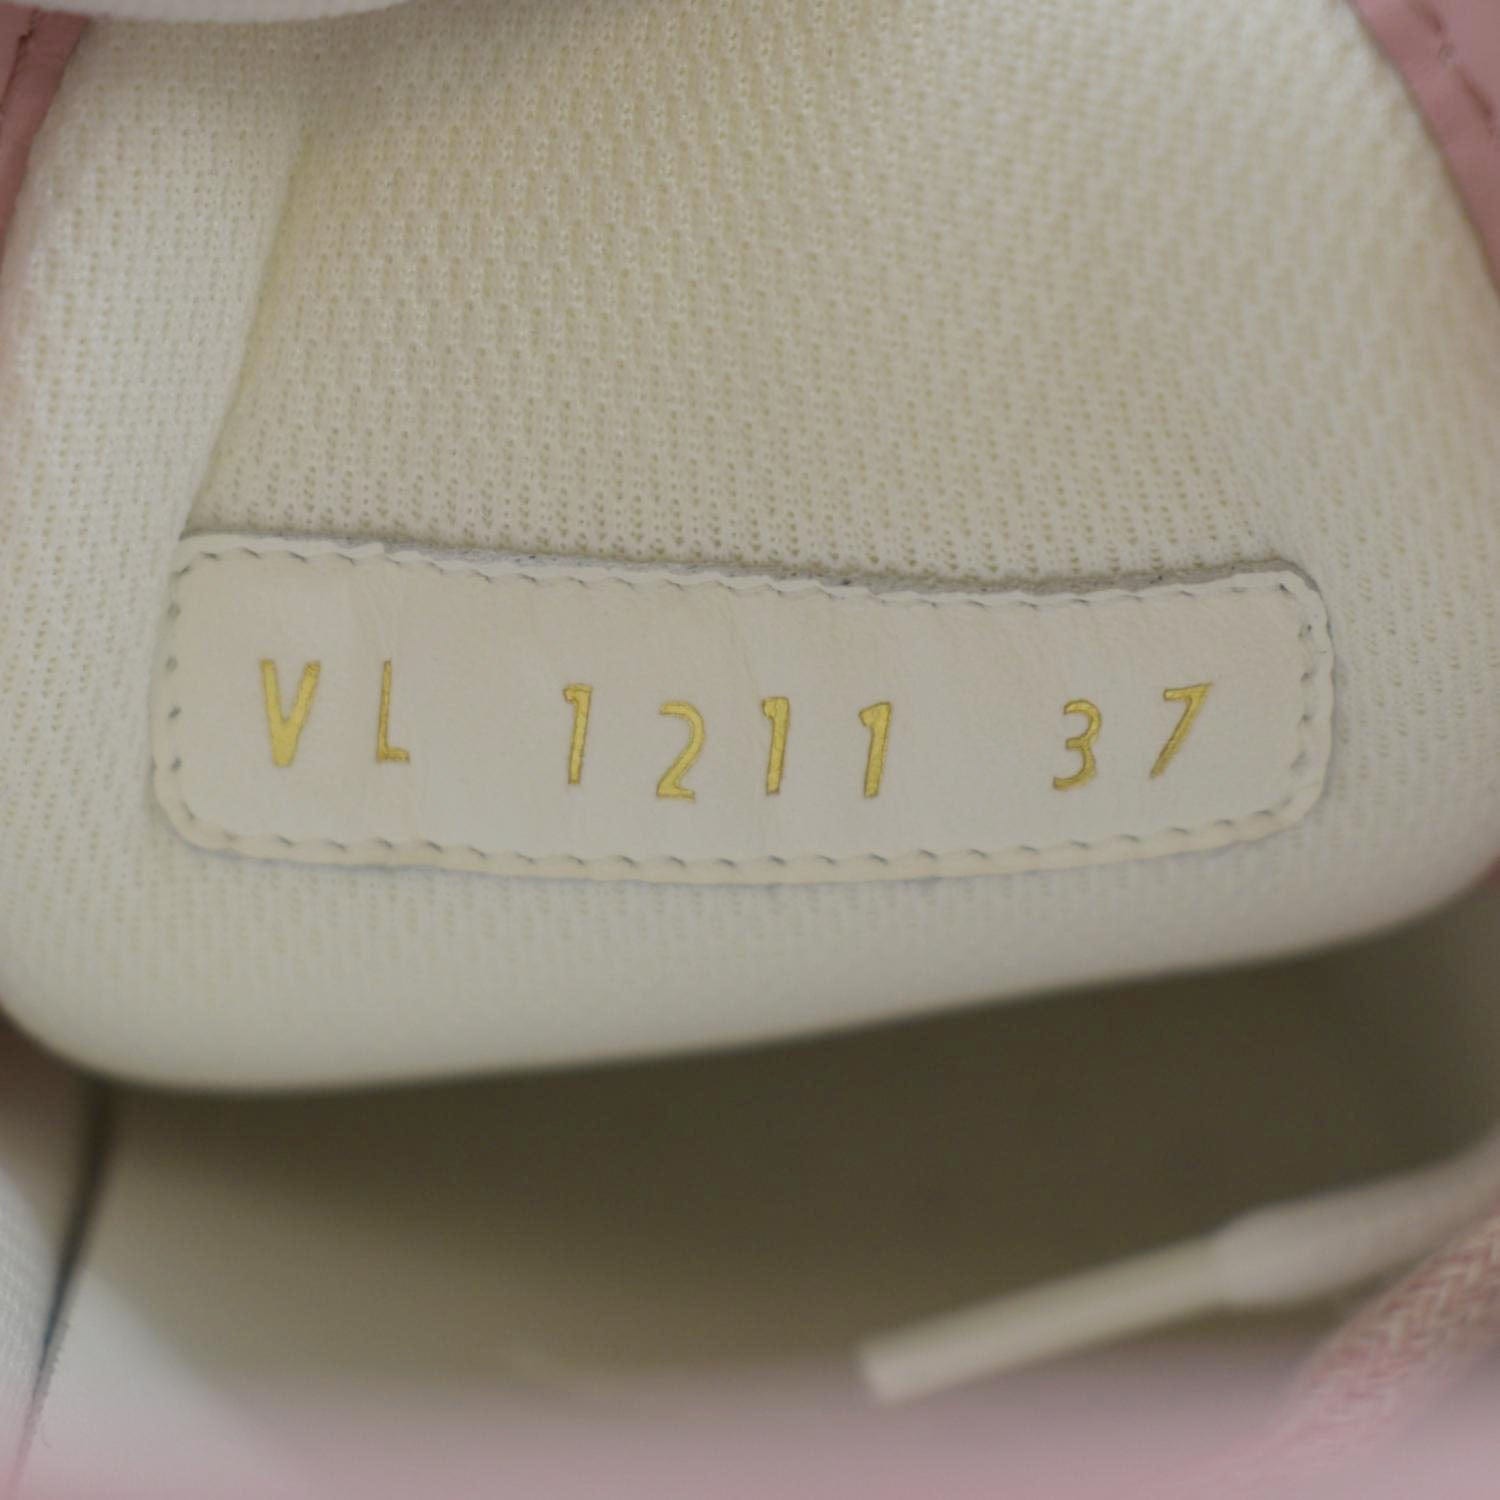 LOUIS VUITTON Denim Monogram Squad Sneakers 39.5 Pink 1302032